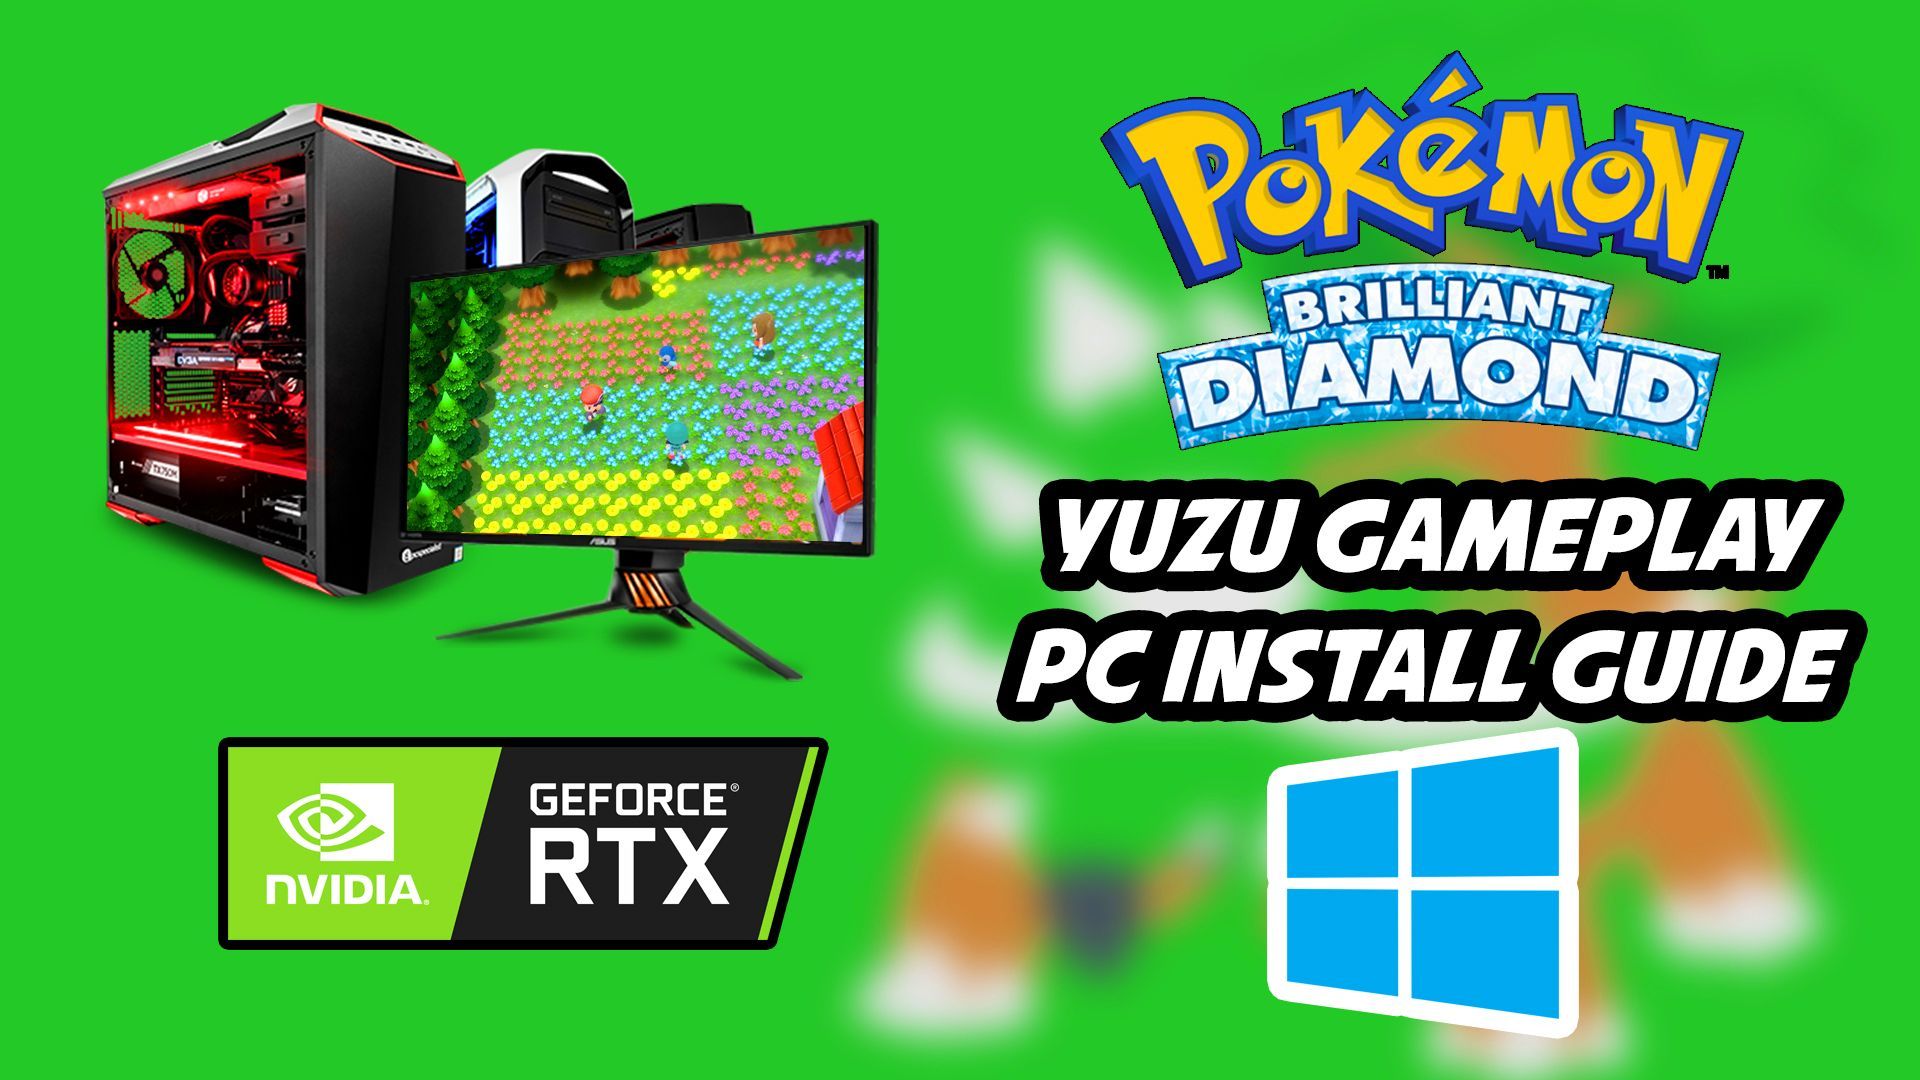 How to download and play Pokémon BDSP on PC [XCI] YUZU-RYUJINX